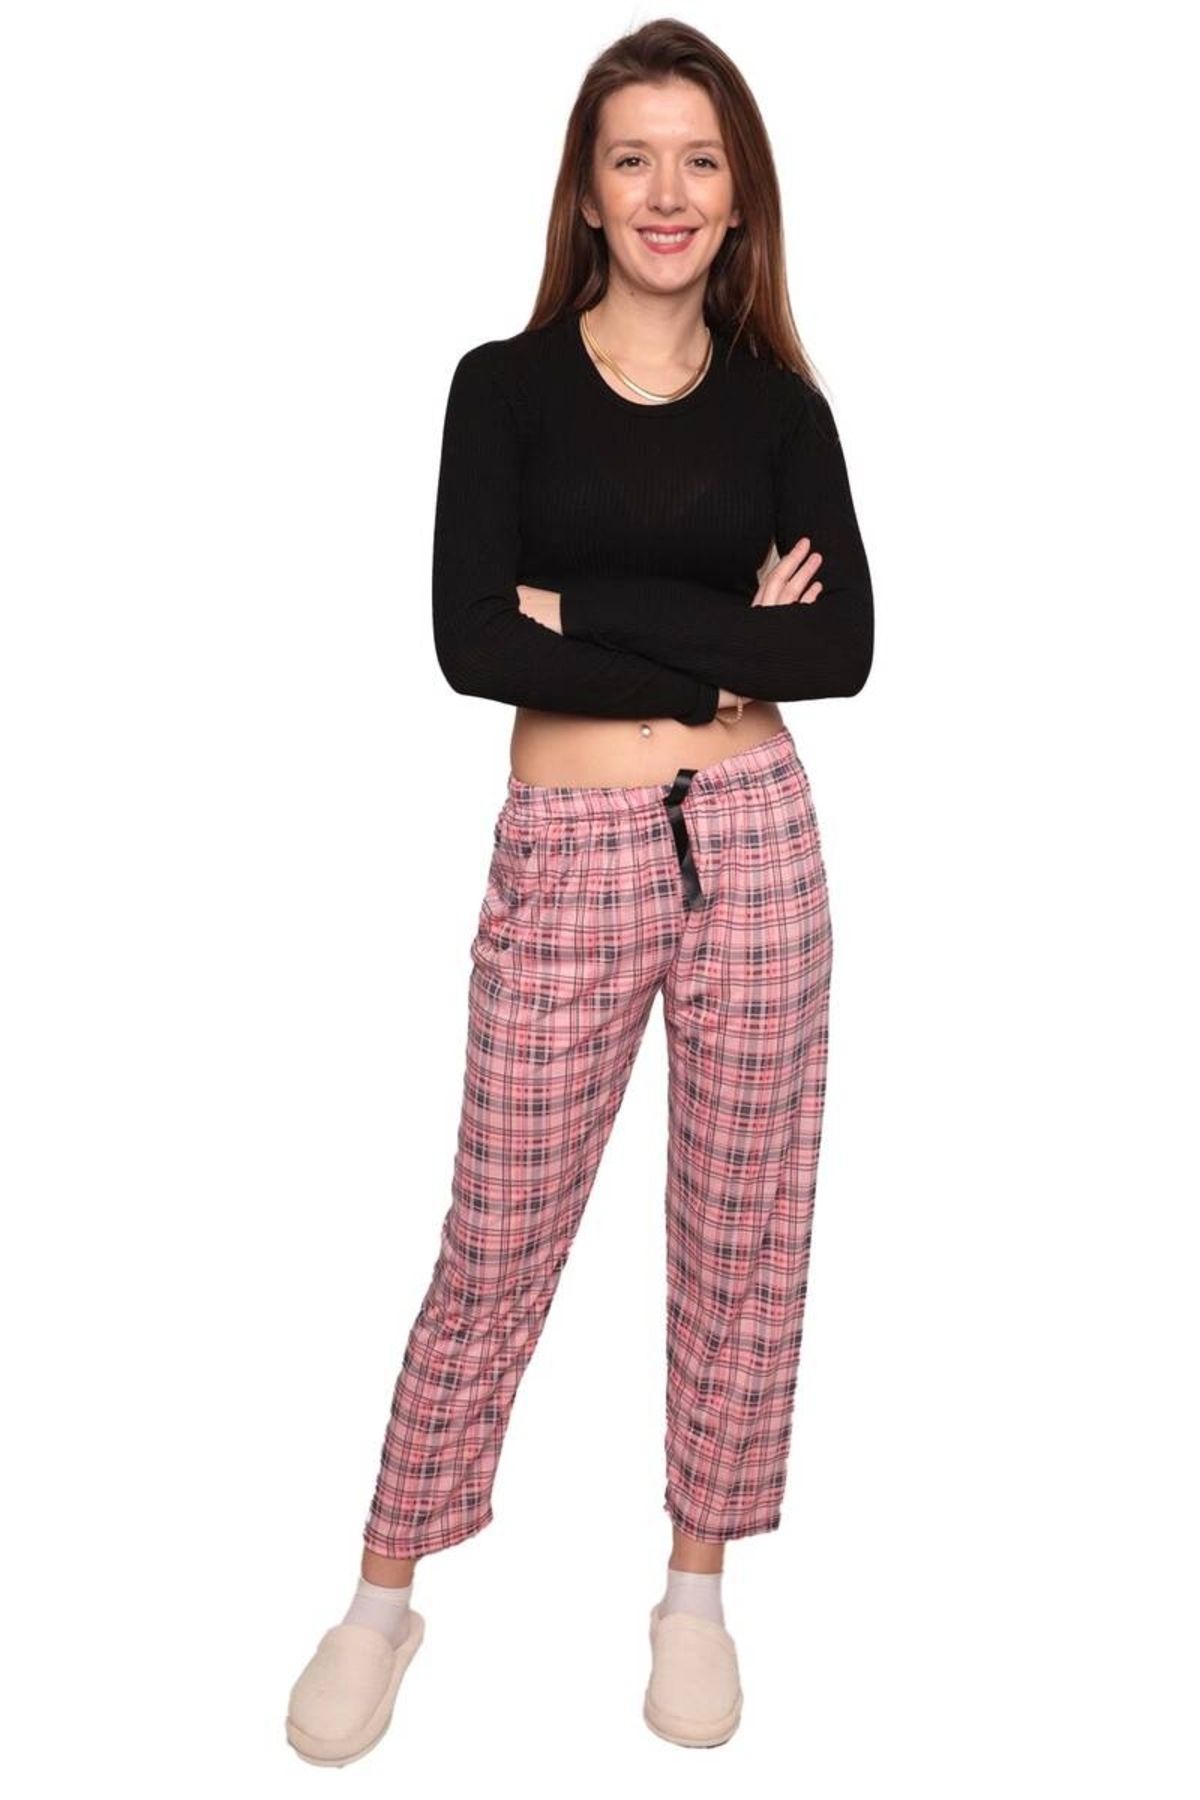 PINK Plaid Pajama Pants for Women